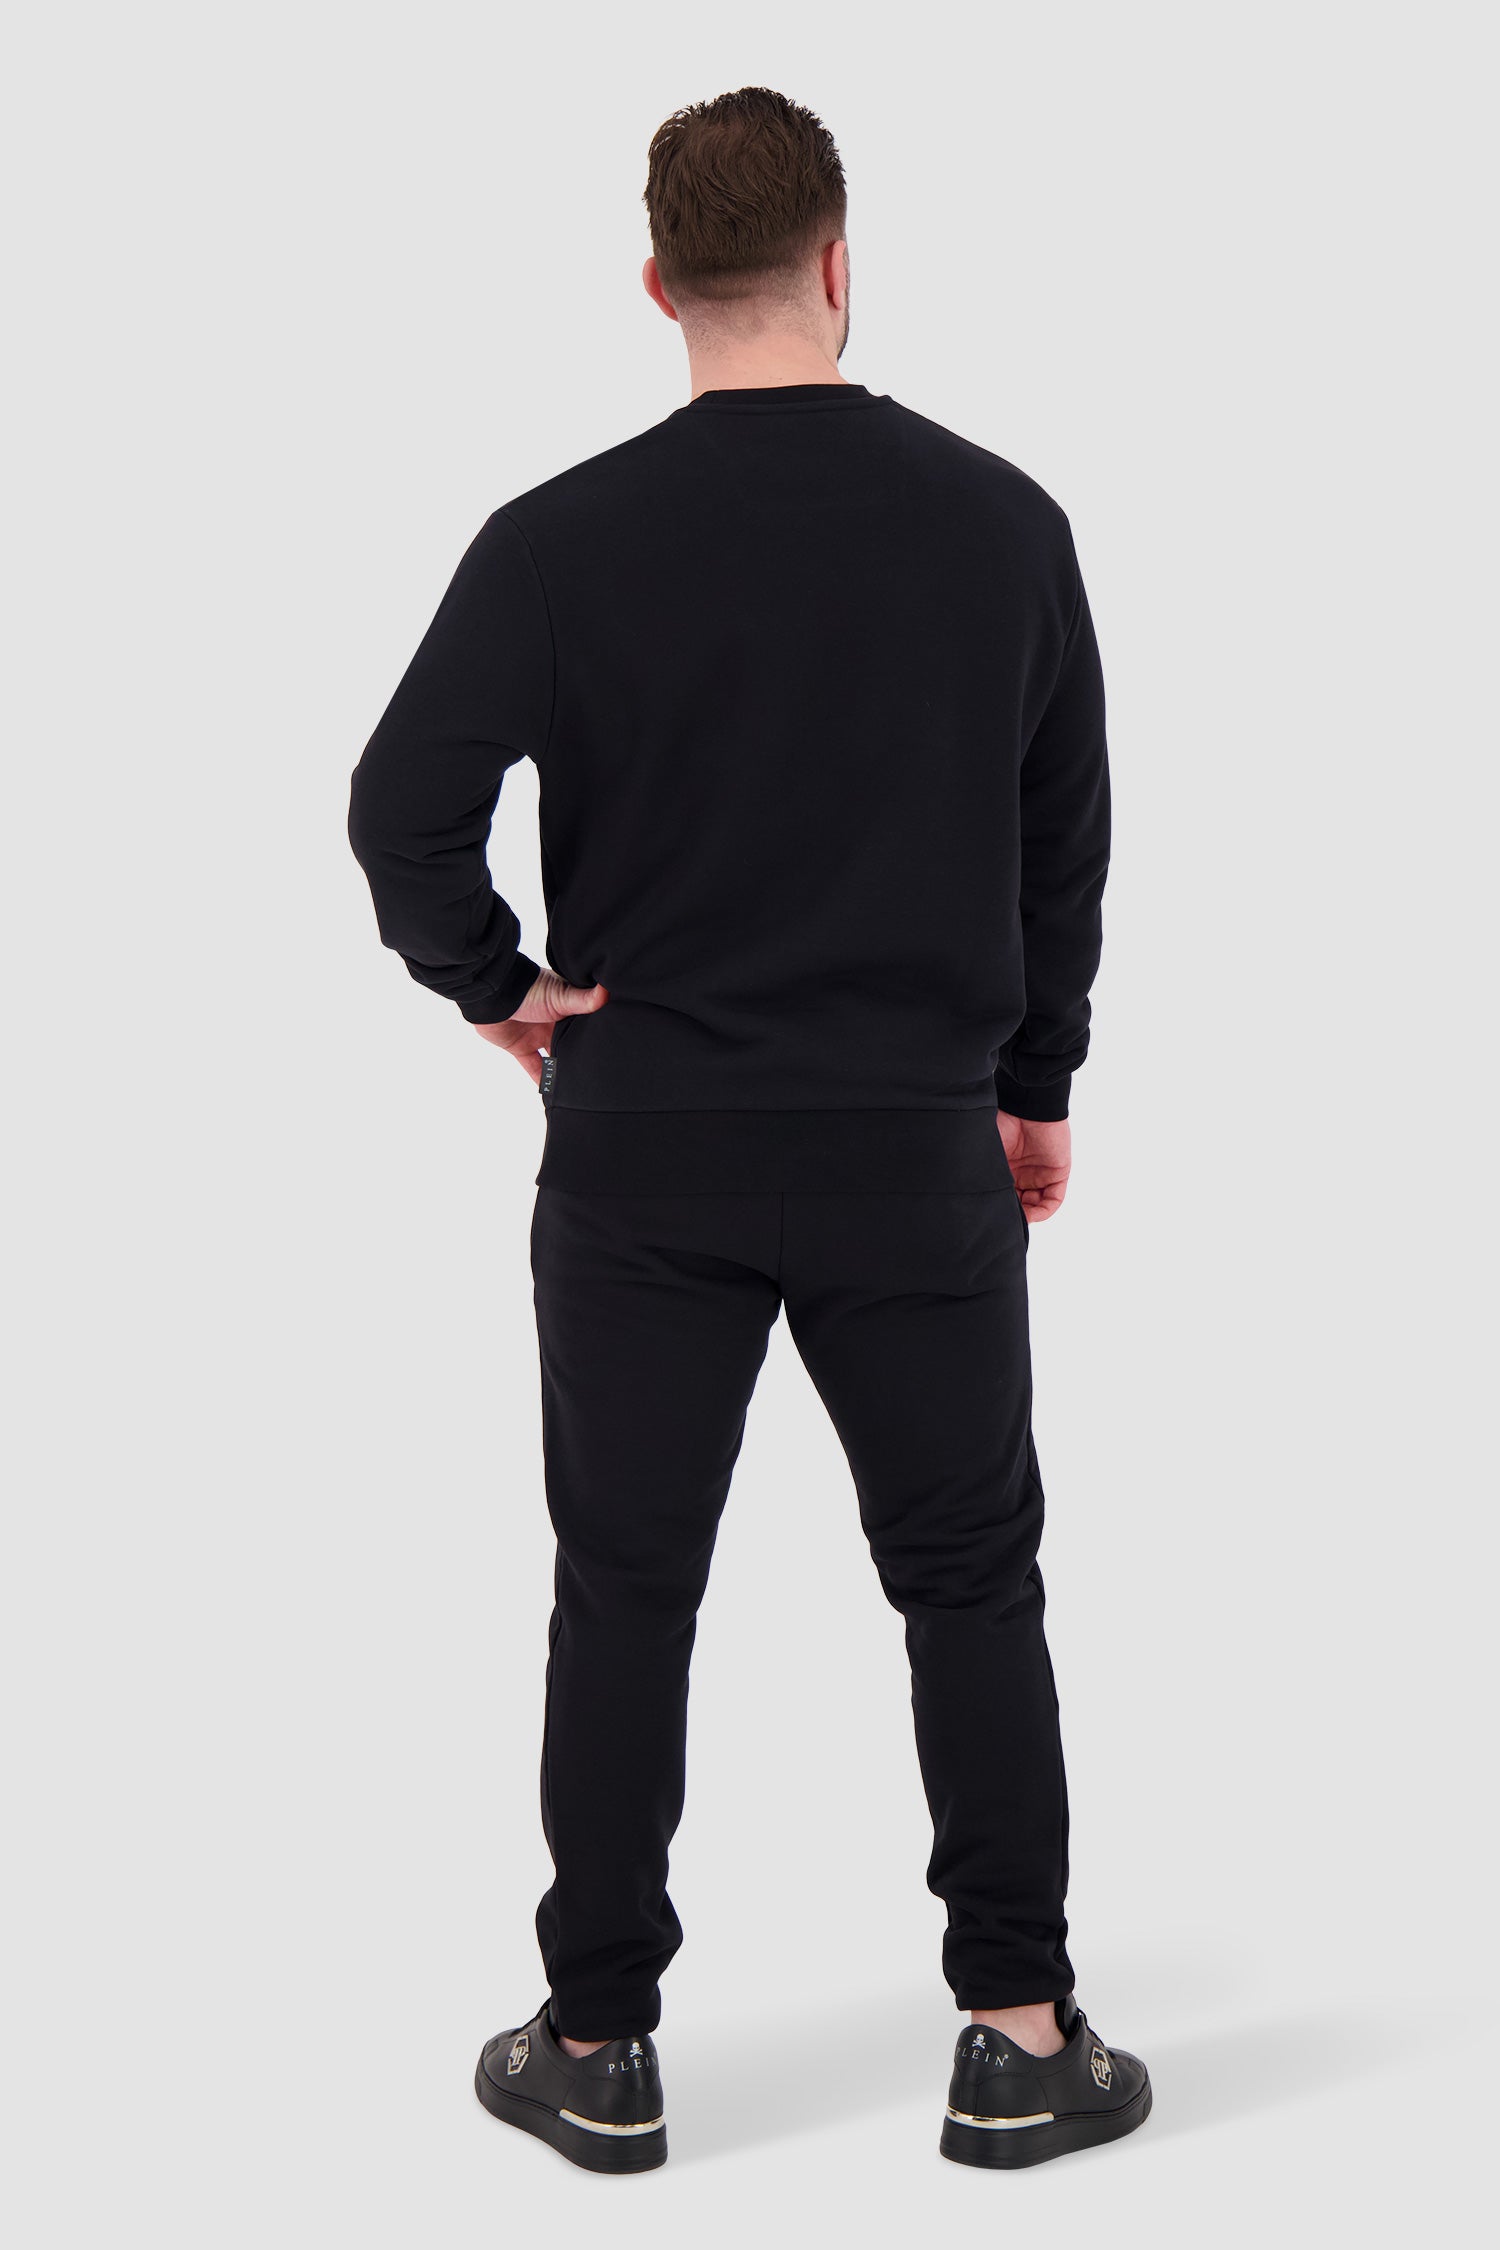 Philipp Plein Black LS Hexagon Sweatshirt